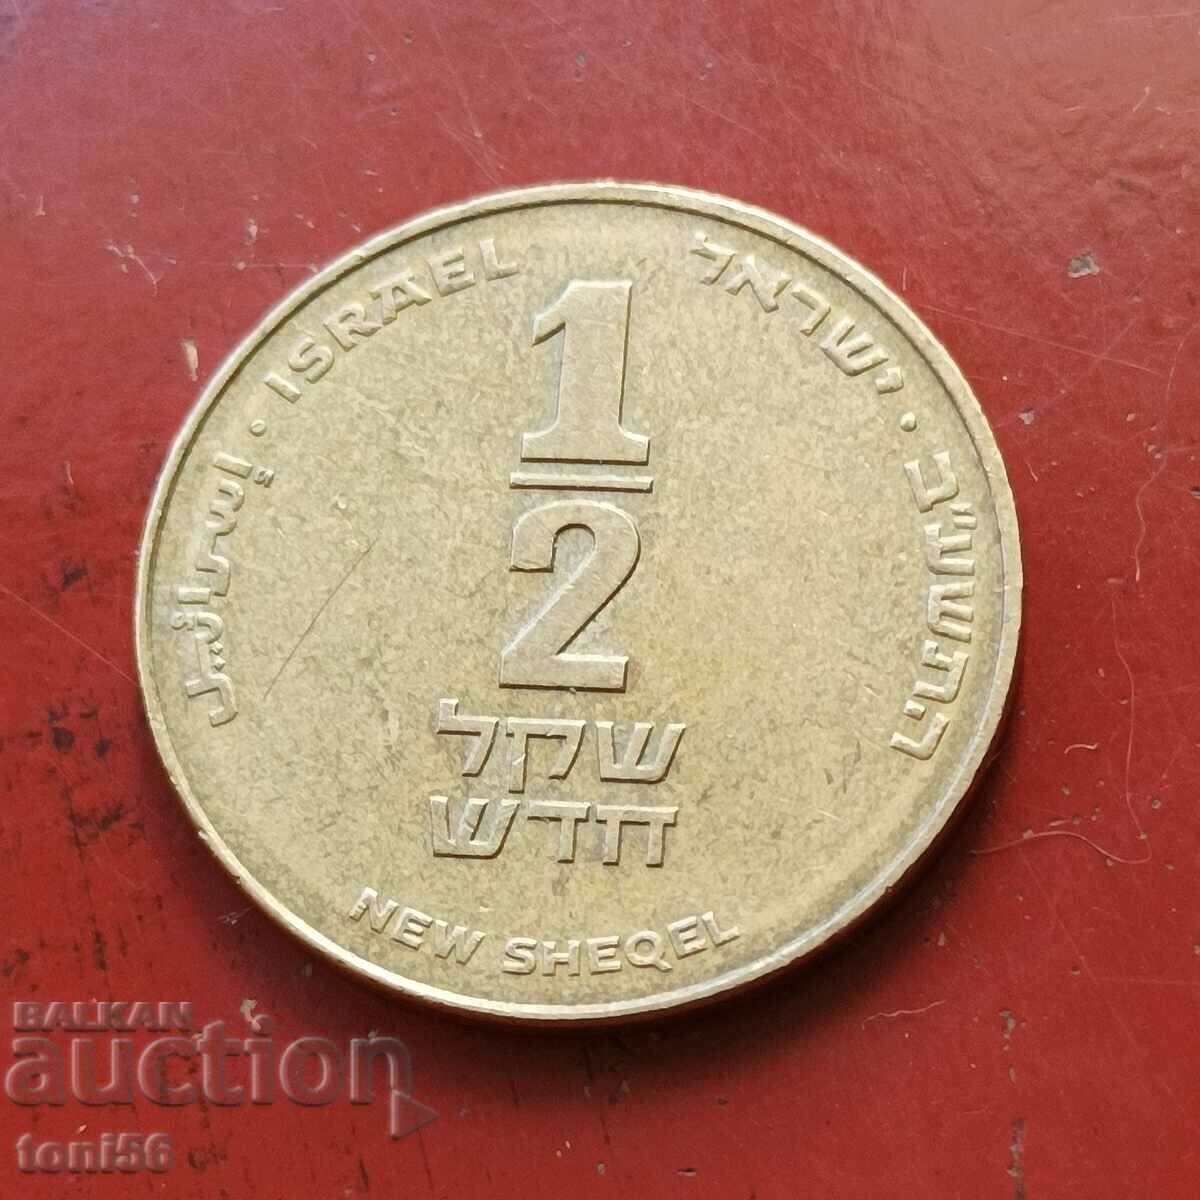 Israel 1/2 new shekel 1992 - quality